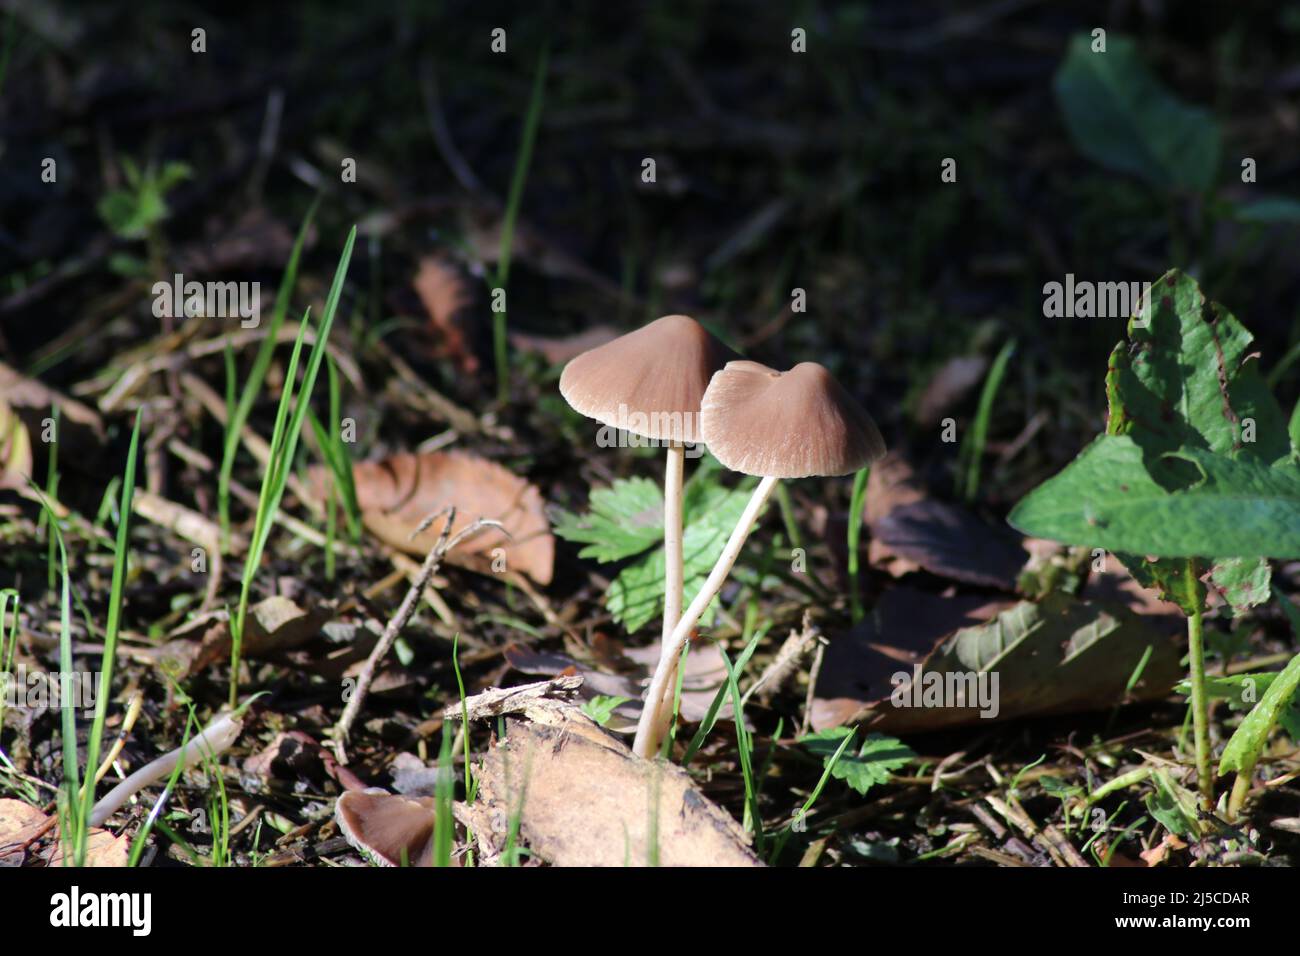 Psathyrella conopilus mushroom during autumn in the botanical garden of Capelle aan den IJssel Stock Photo